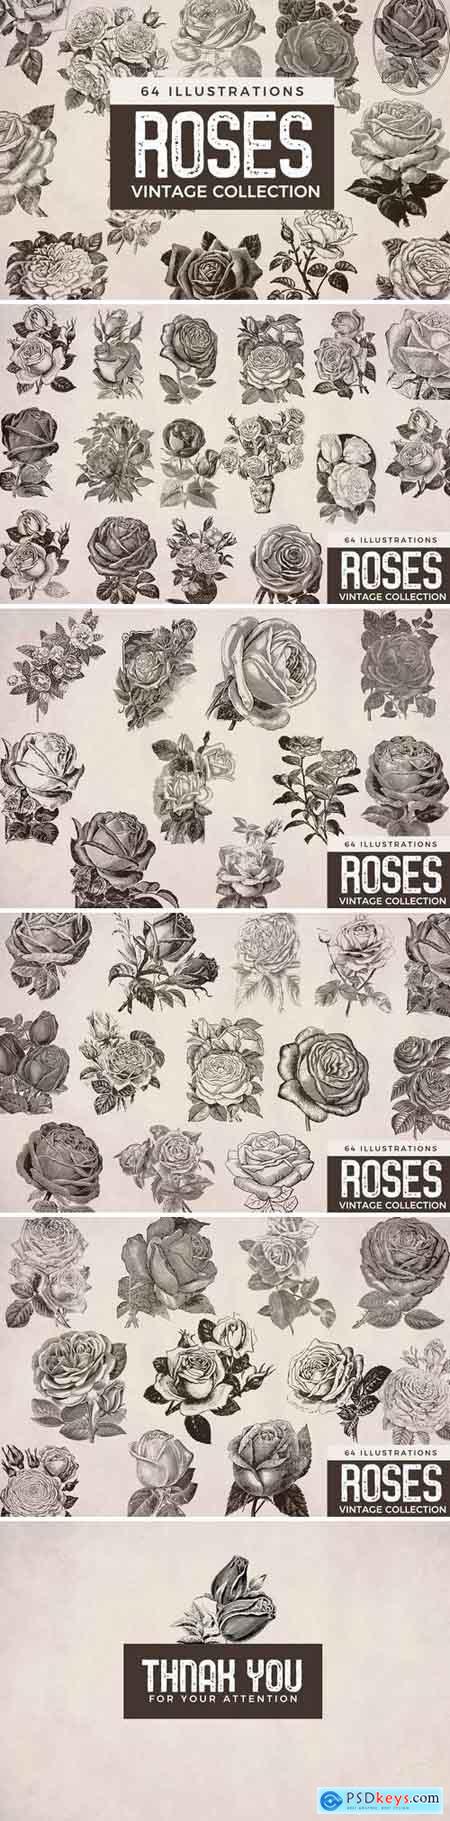 Vintage Roses - Illustration Collection